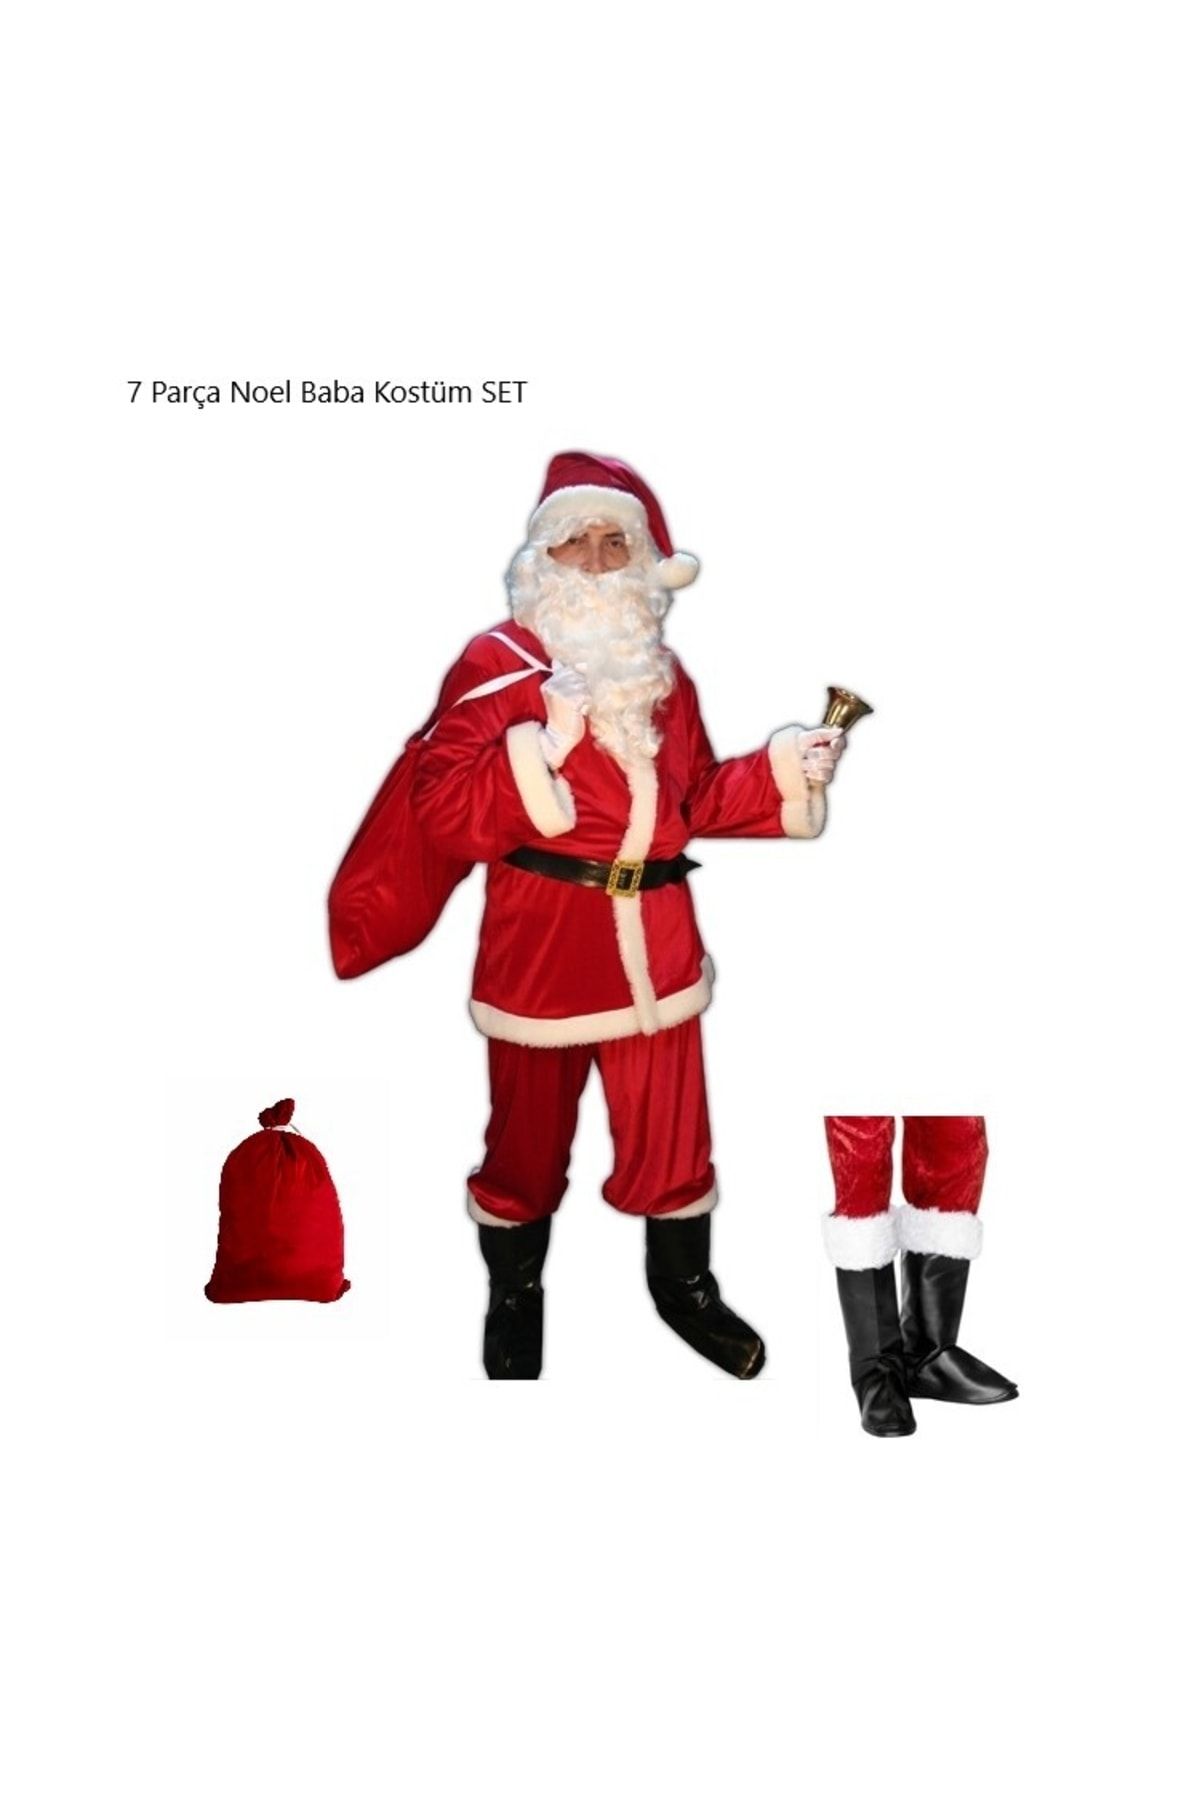 Annee Bakk Lüx Kadife Noel Baba Kostüm Seti 7 Parça